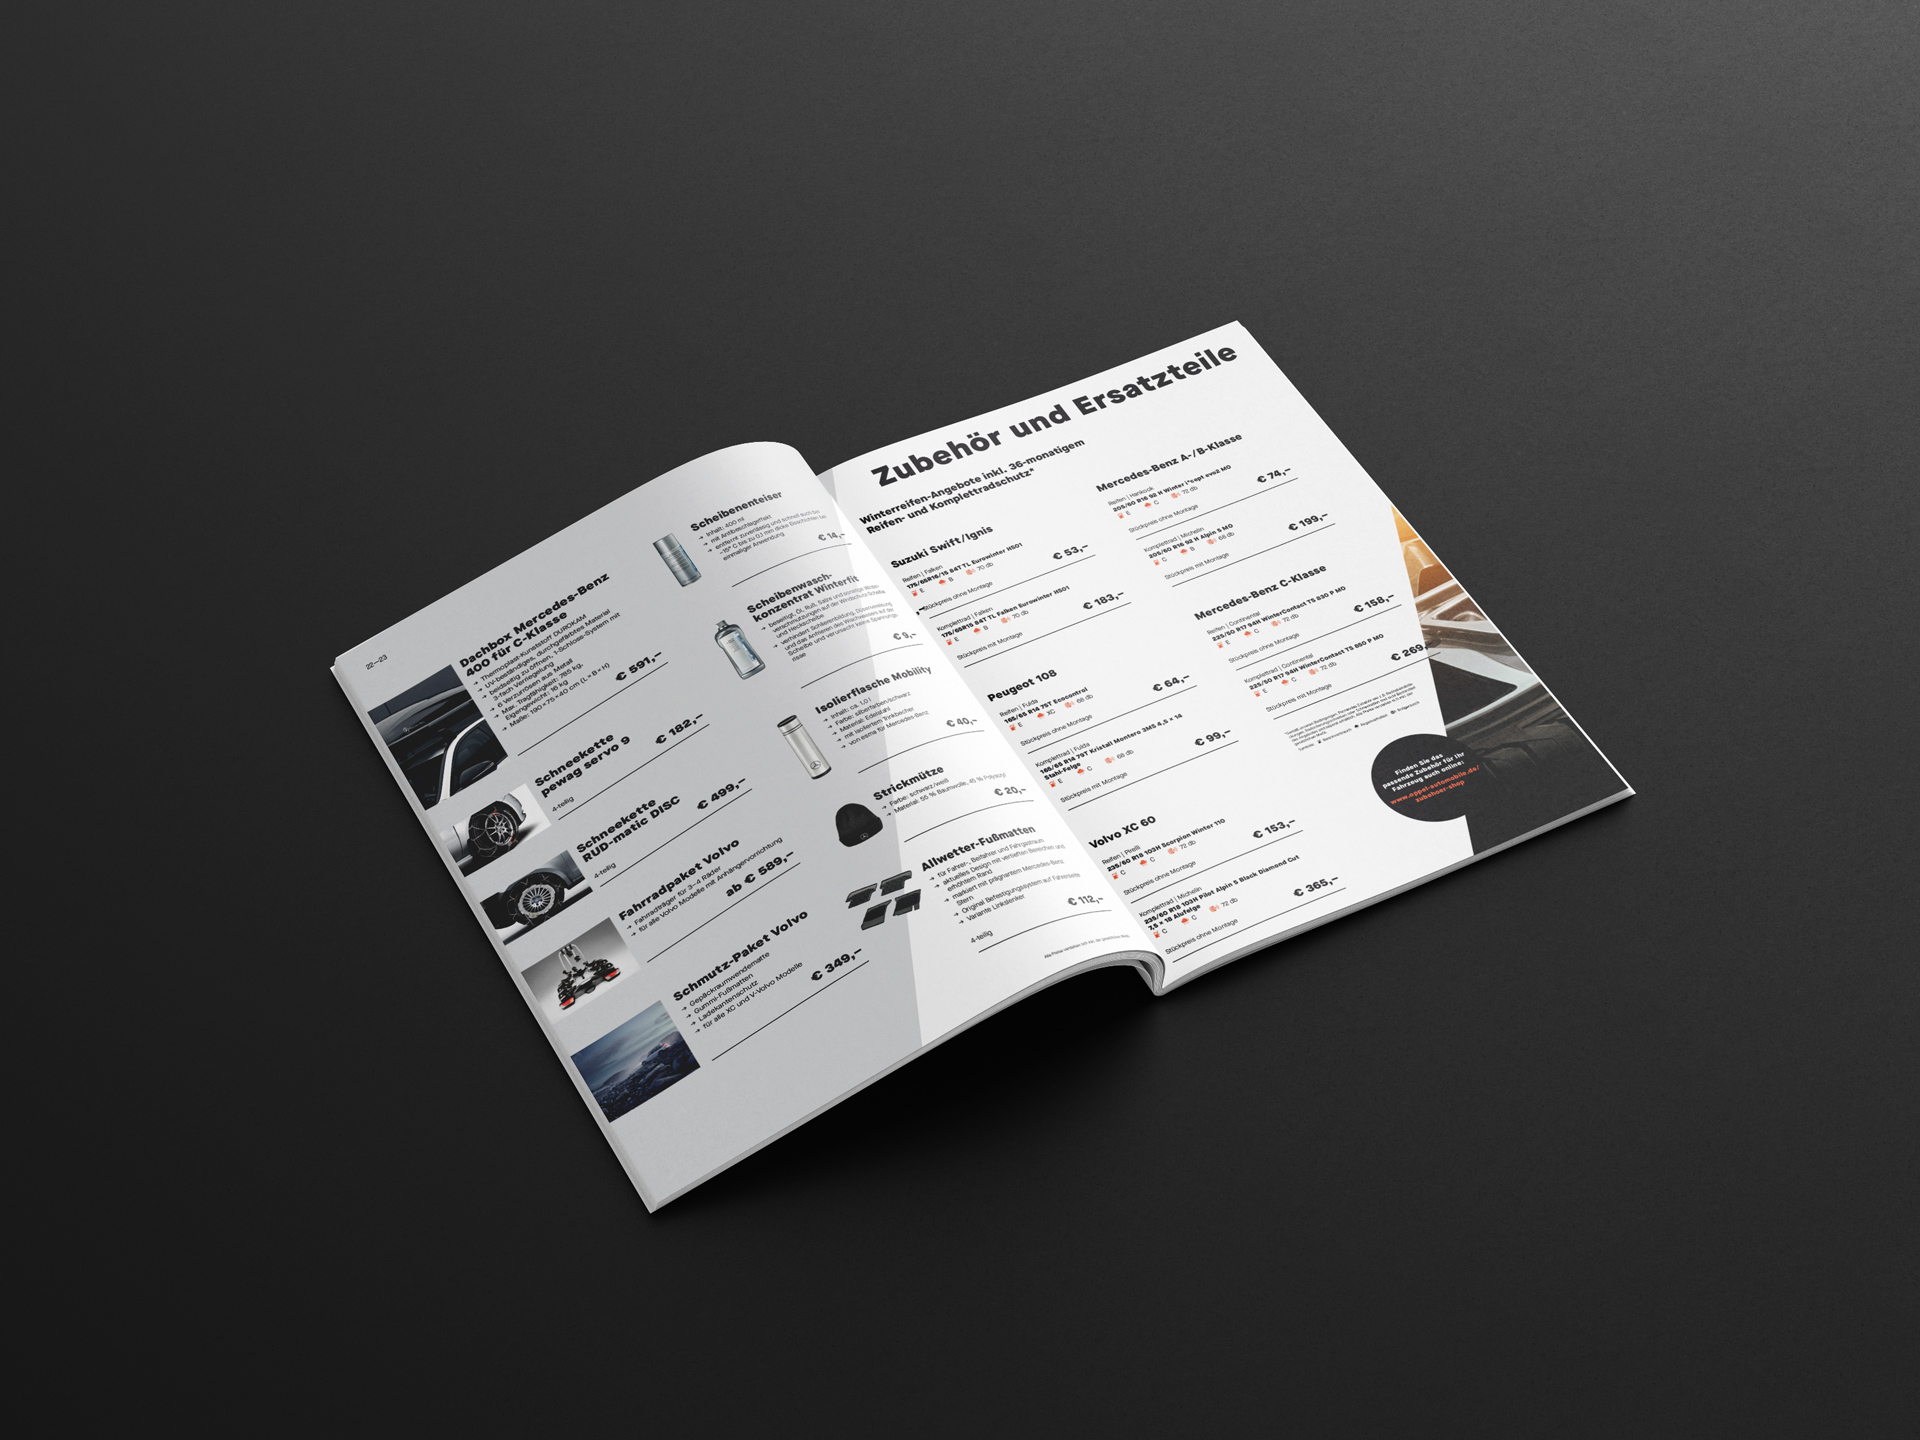 Oppel Automobile – Corporate Design Autohaus, Kundenmagazin Editorial Doppelseite